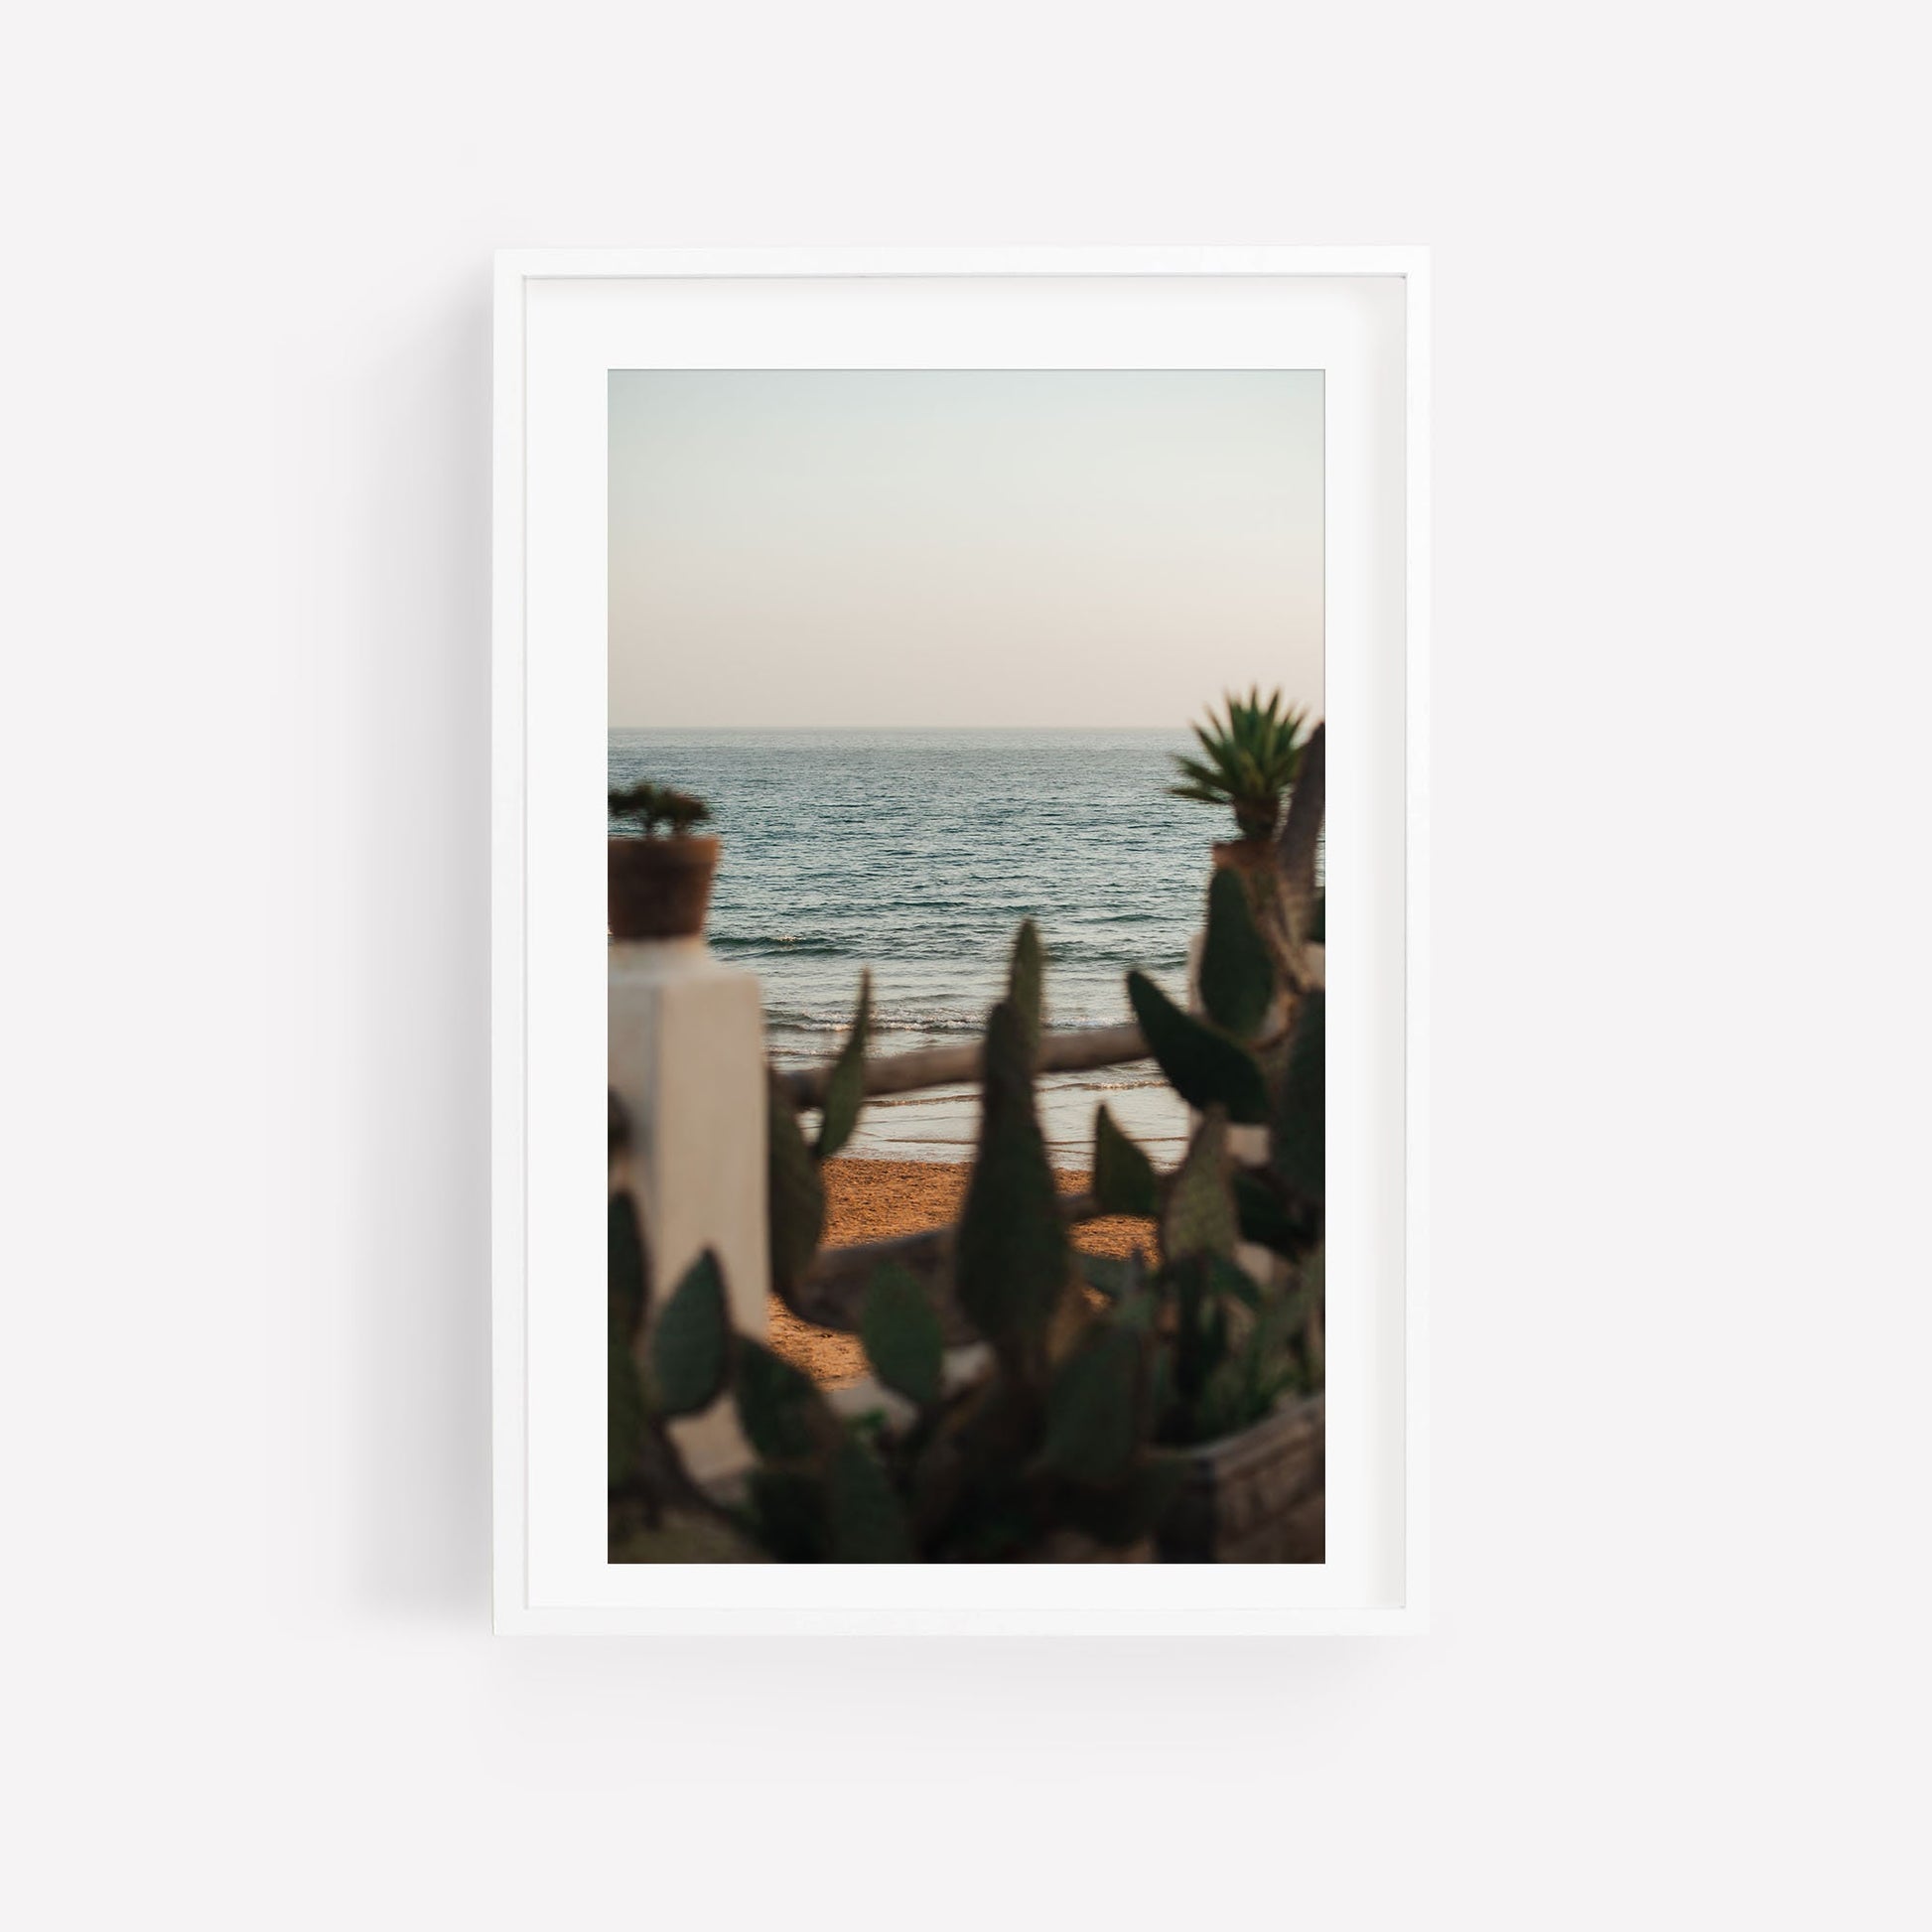 Taghazout Morocco Fine Art Photography - Morocco Photography, Beach Sunset Photography, Framed Ocean Print, Large Coastal Photography Framed